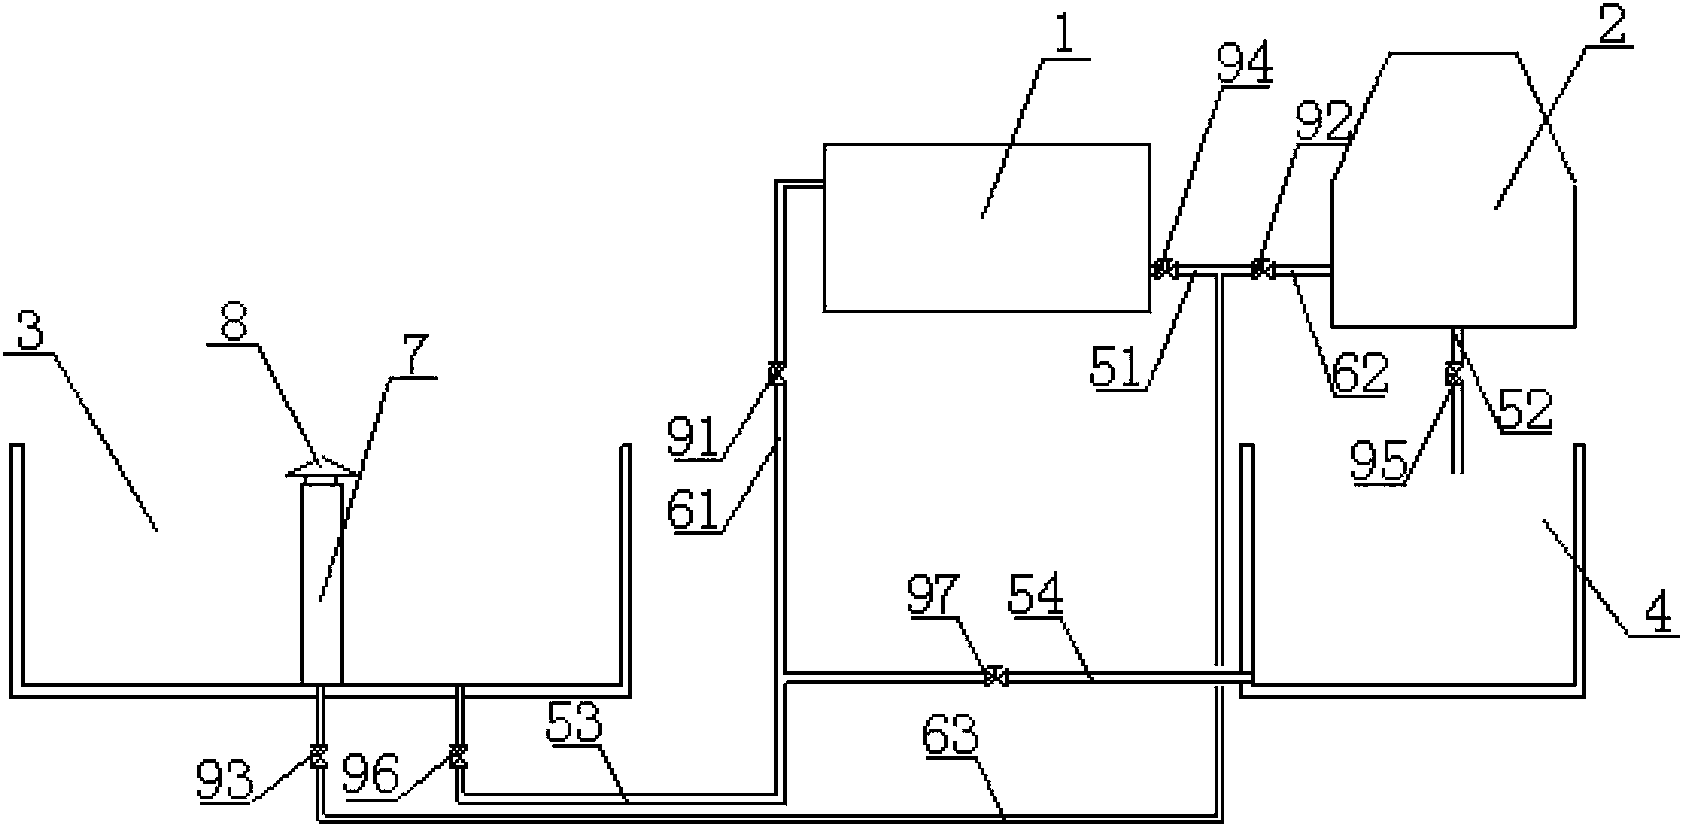 Cooling water circulating system